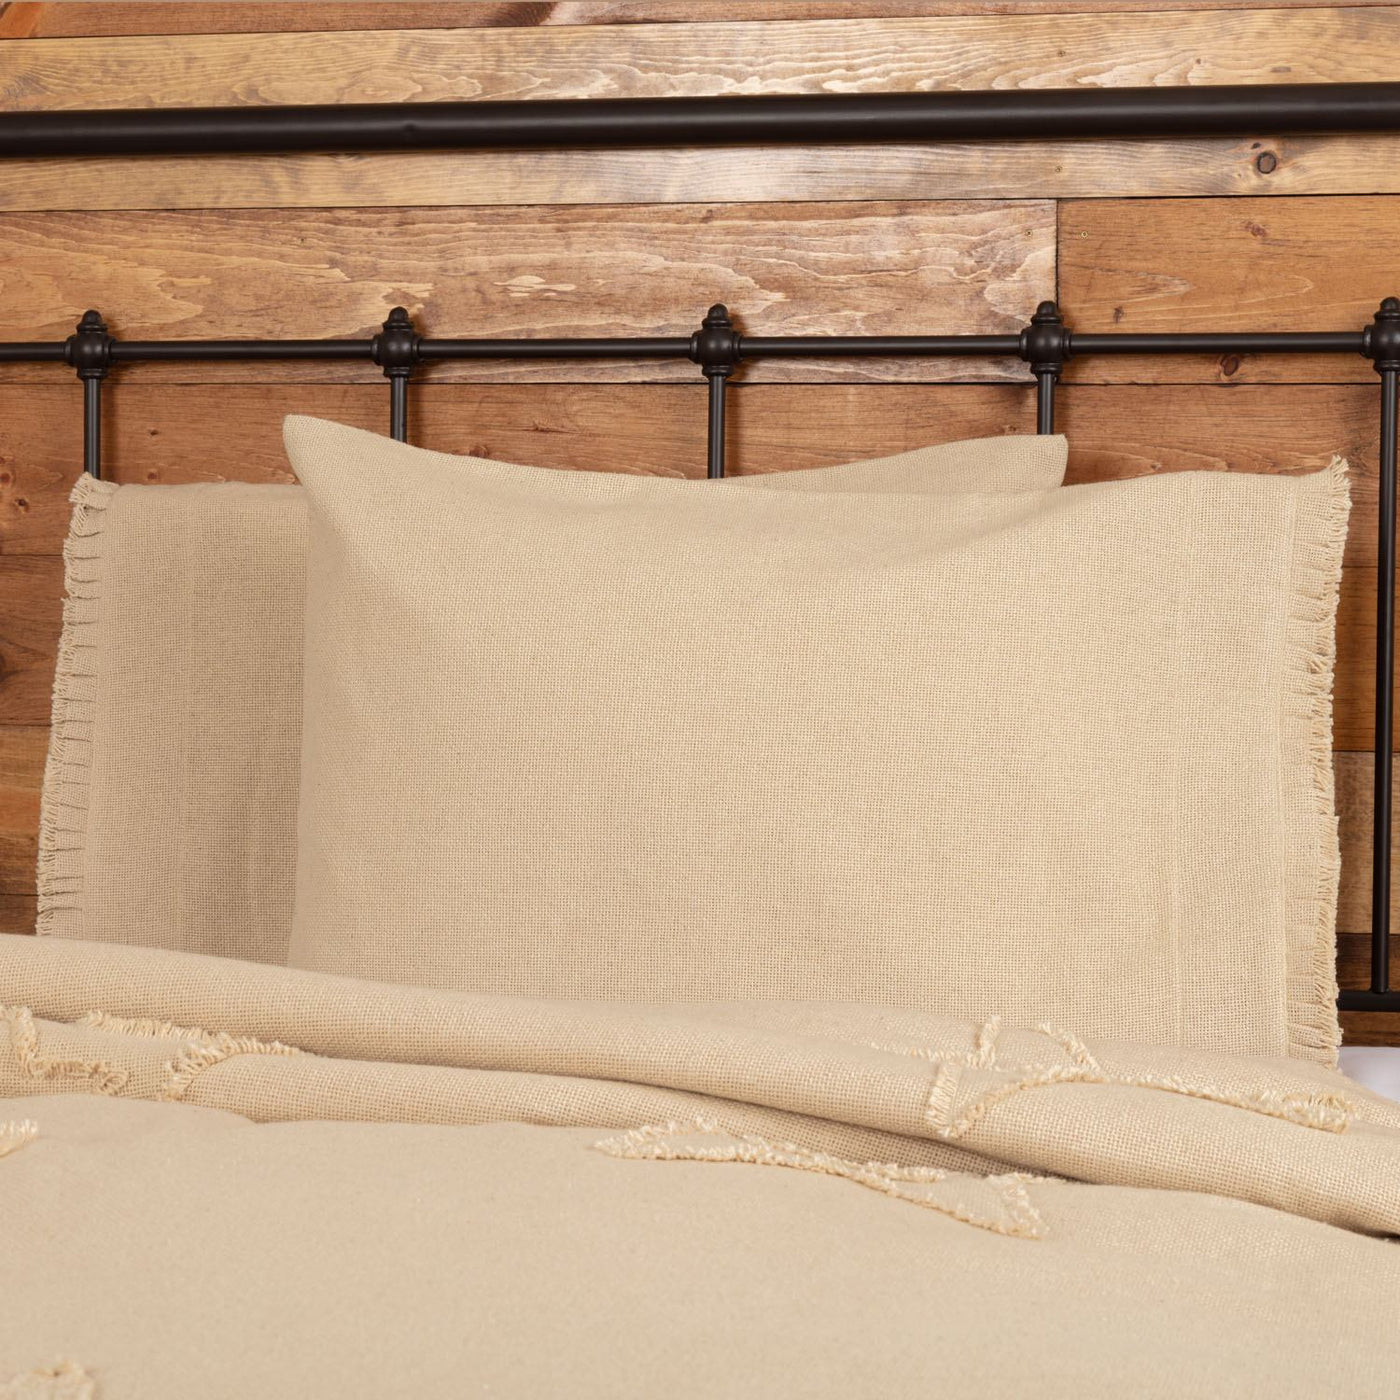 Athol Standard Ruffled Pillow Case - Vintage Tan - Set of 2